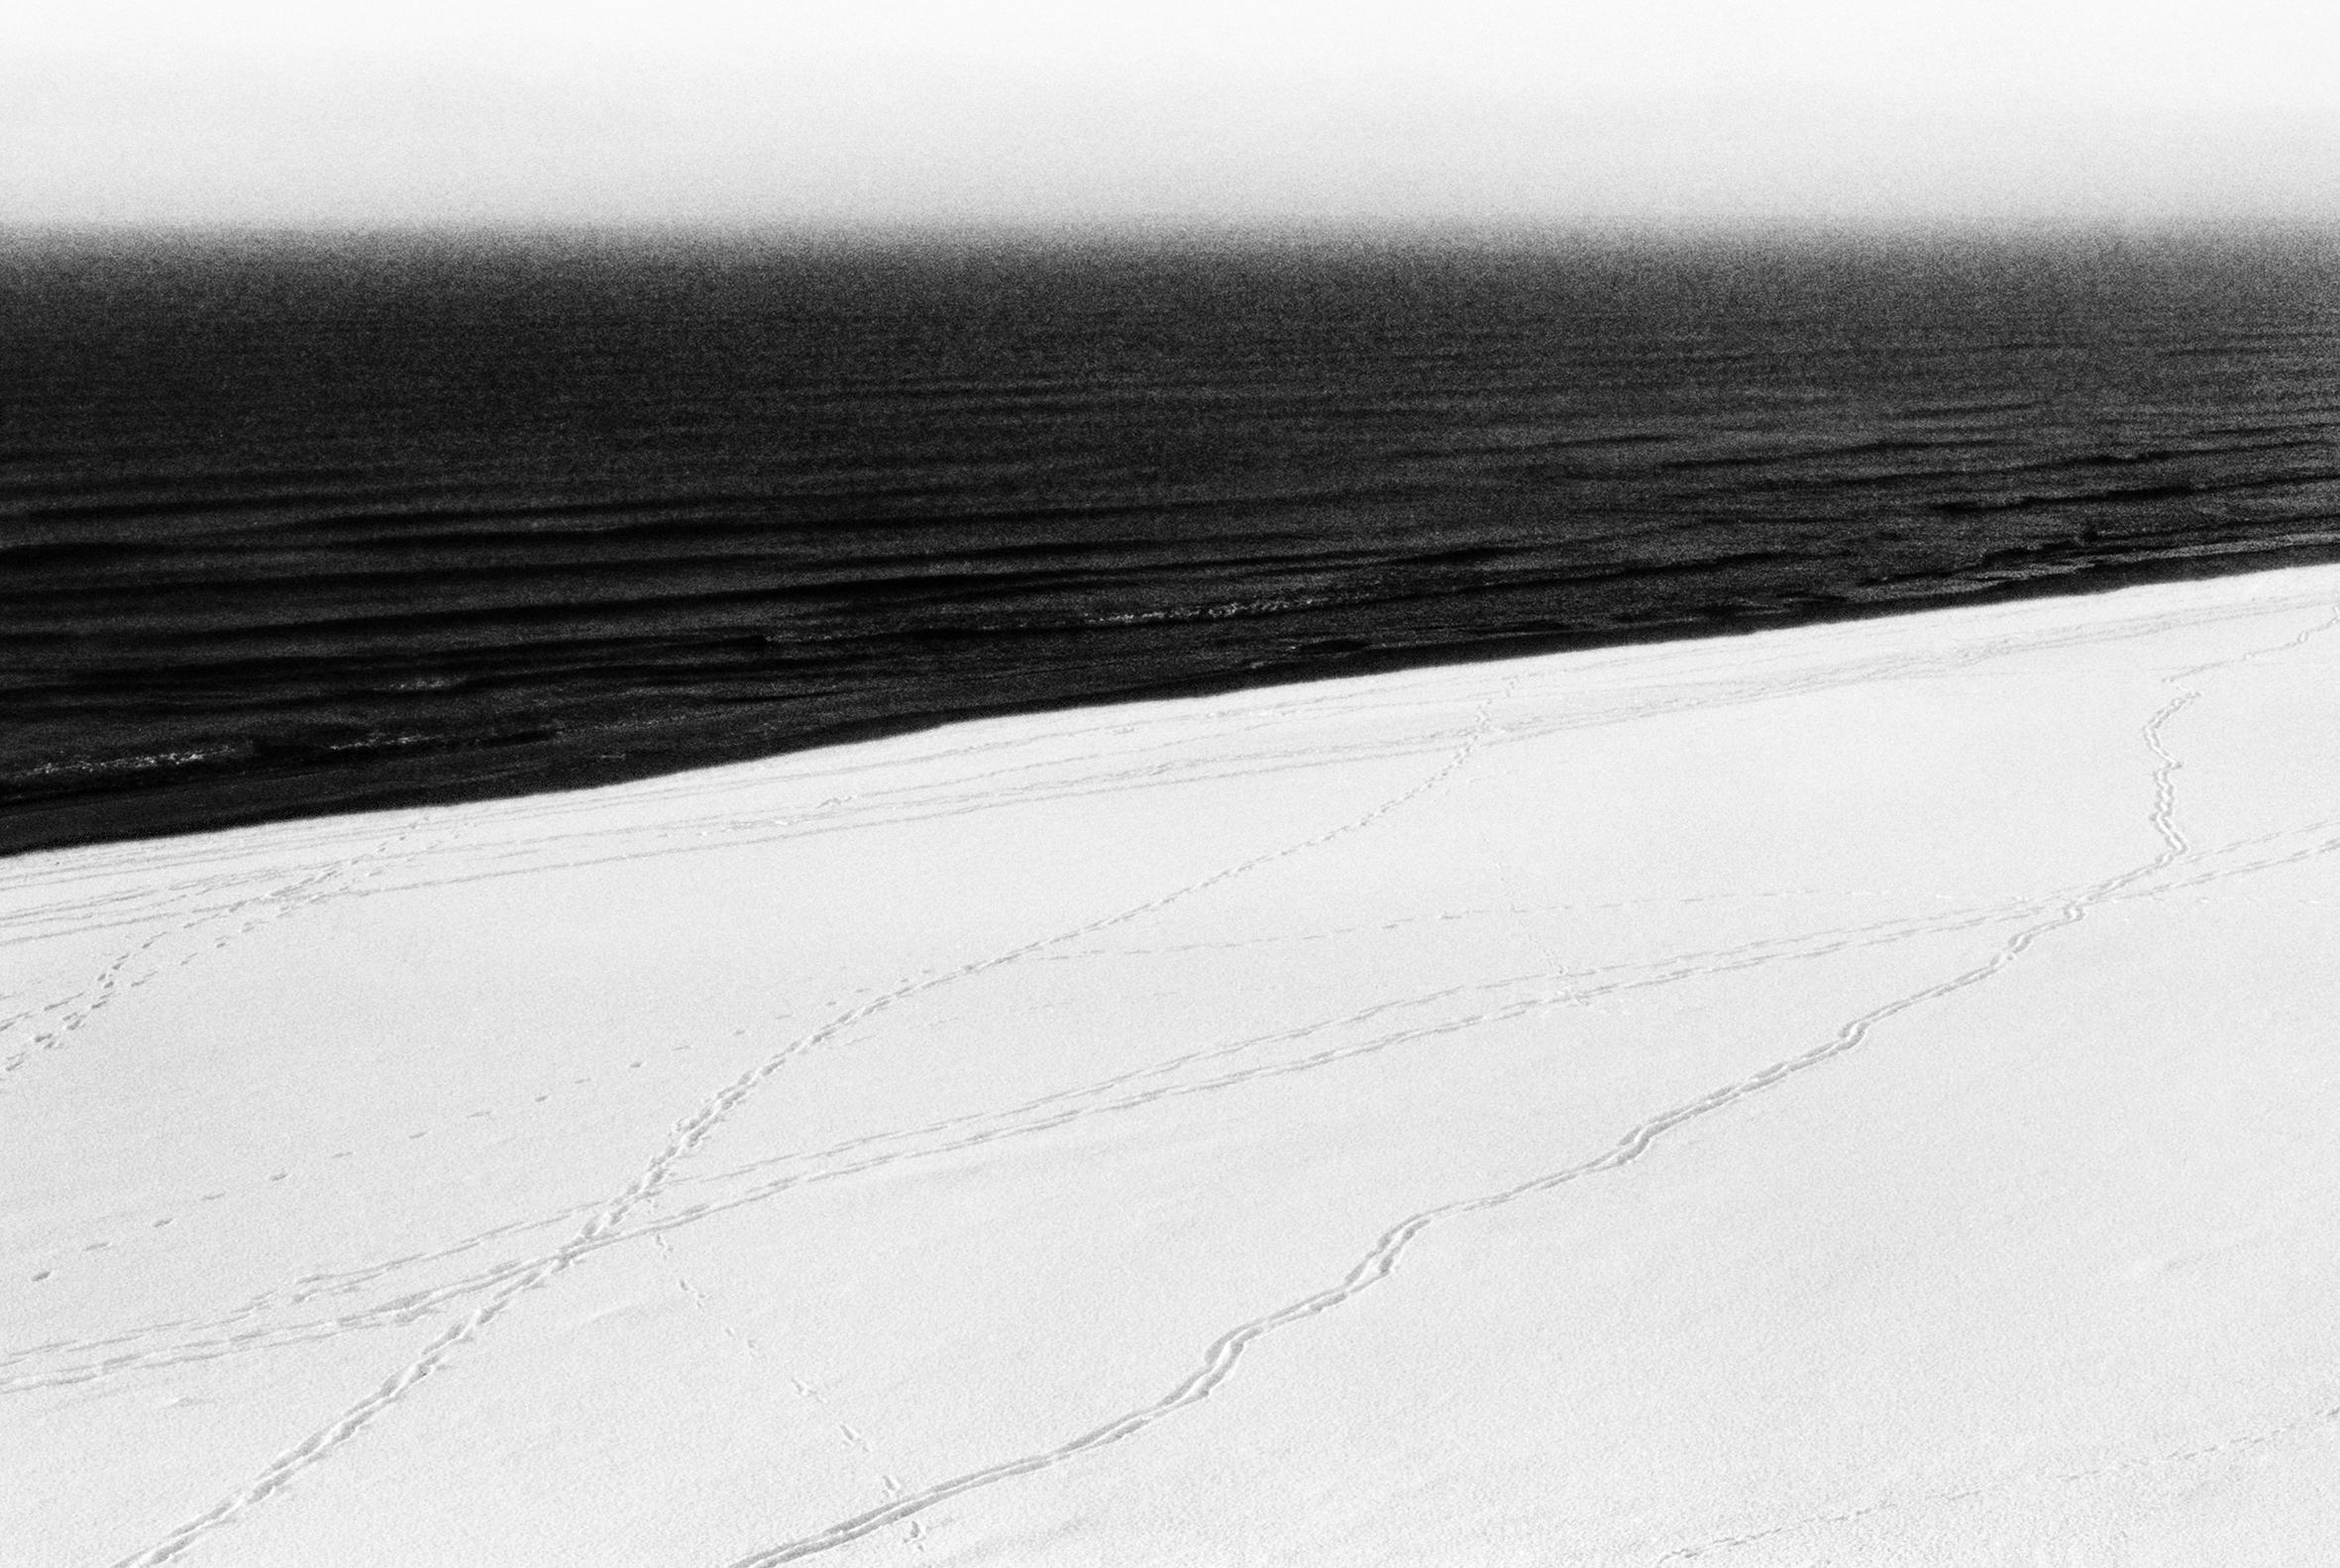 Ugne Pouwell Landscape Photograph - 'Baltic freeze' - black and white analogue landscape photography 42 x 28 cm